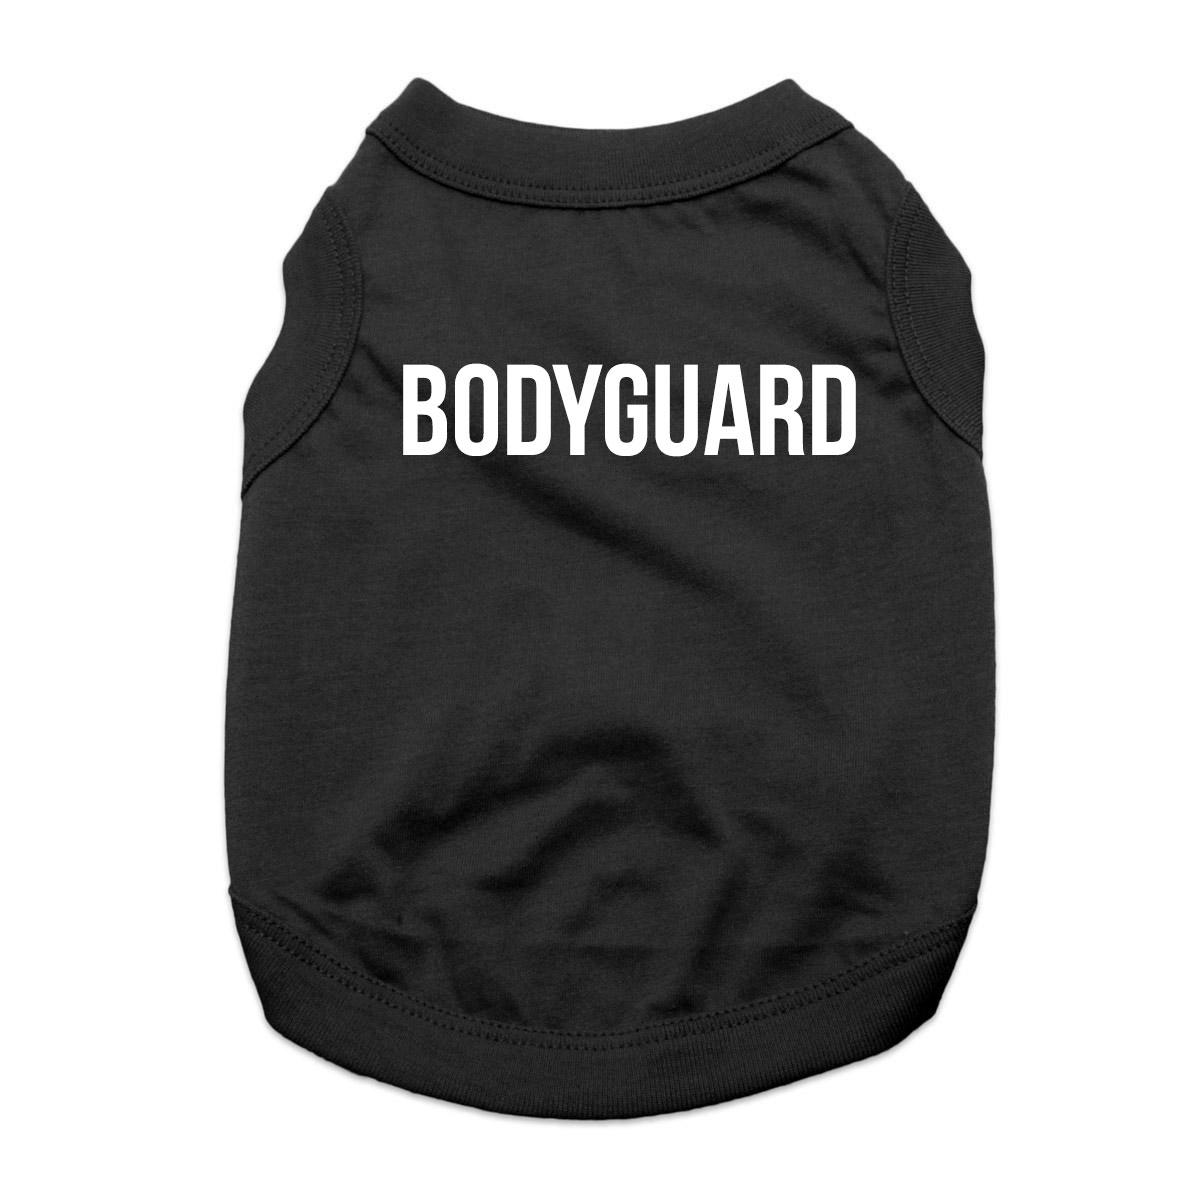 Bodyguard Dog Shirt - Black